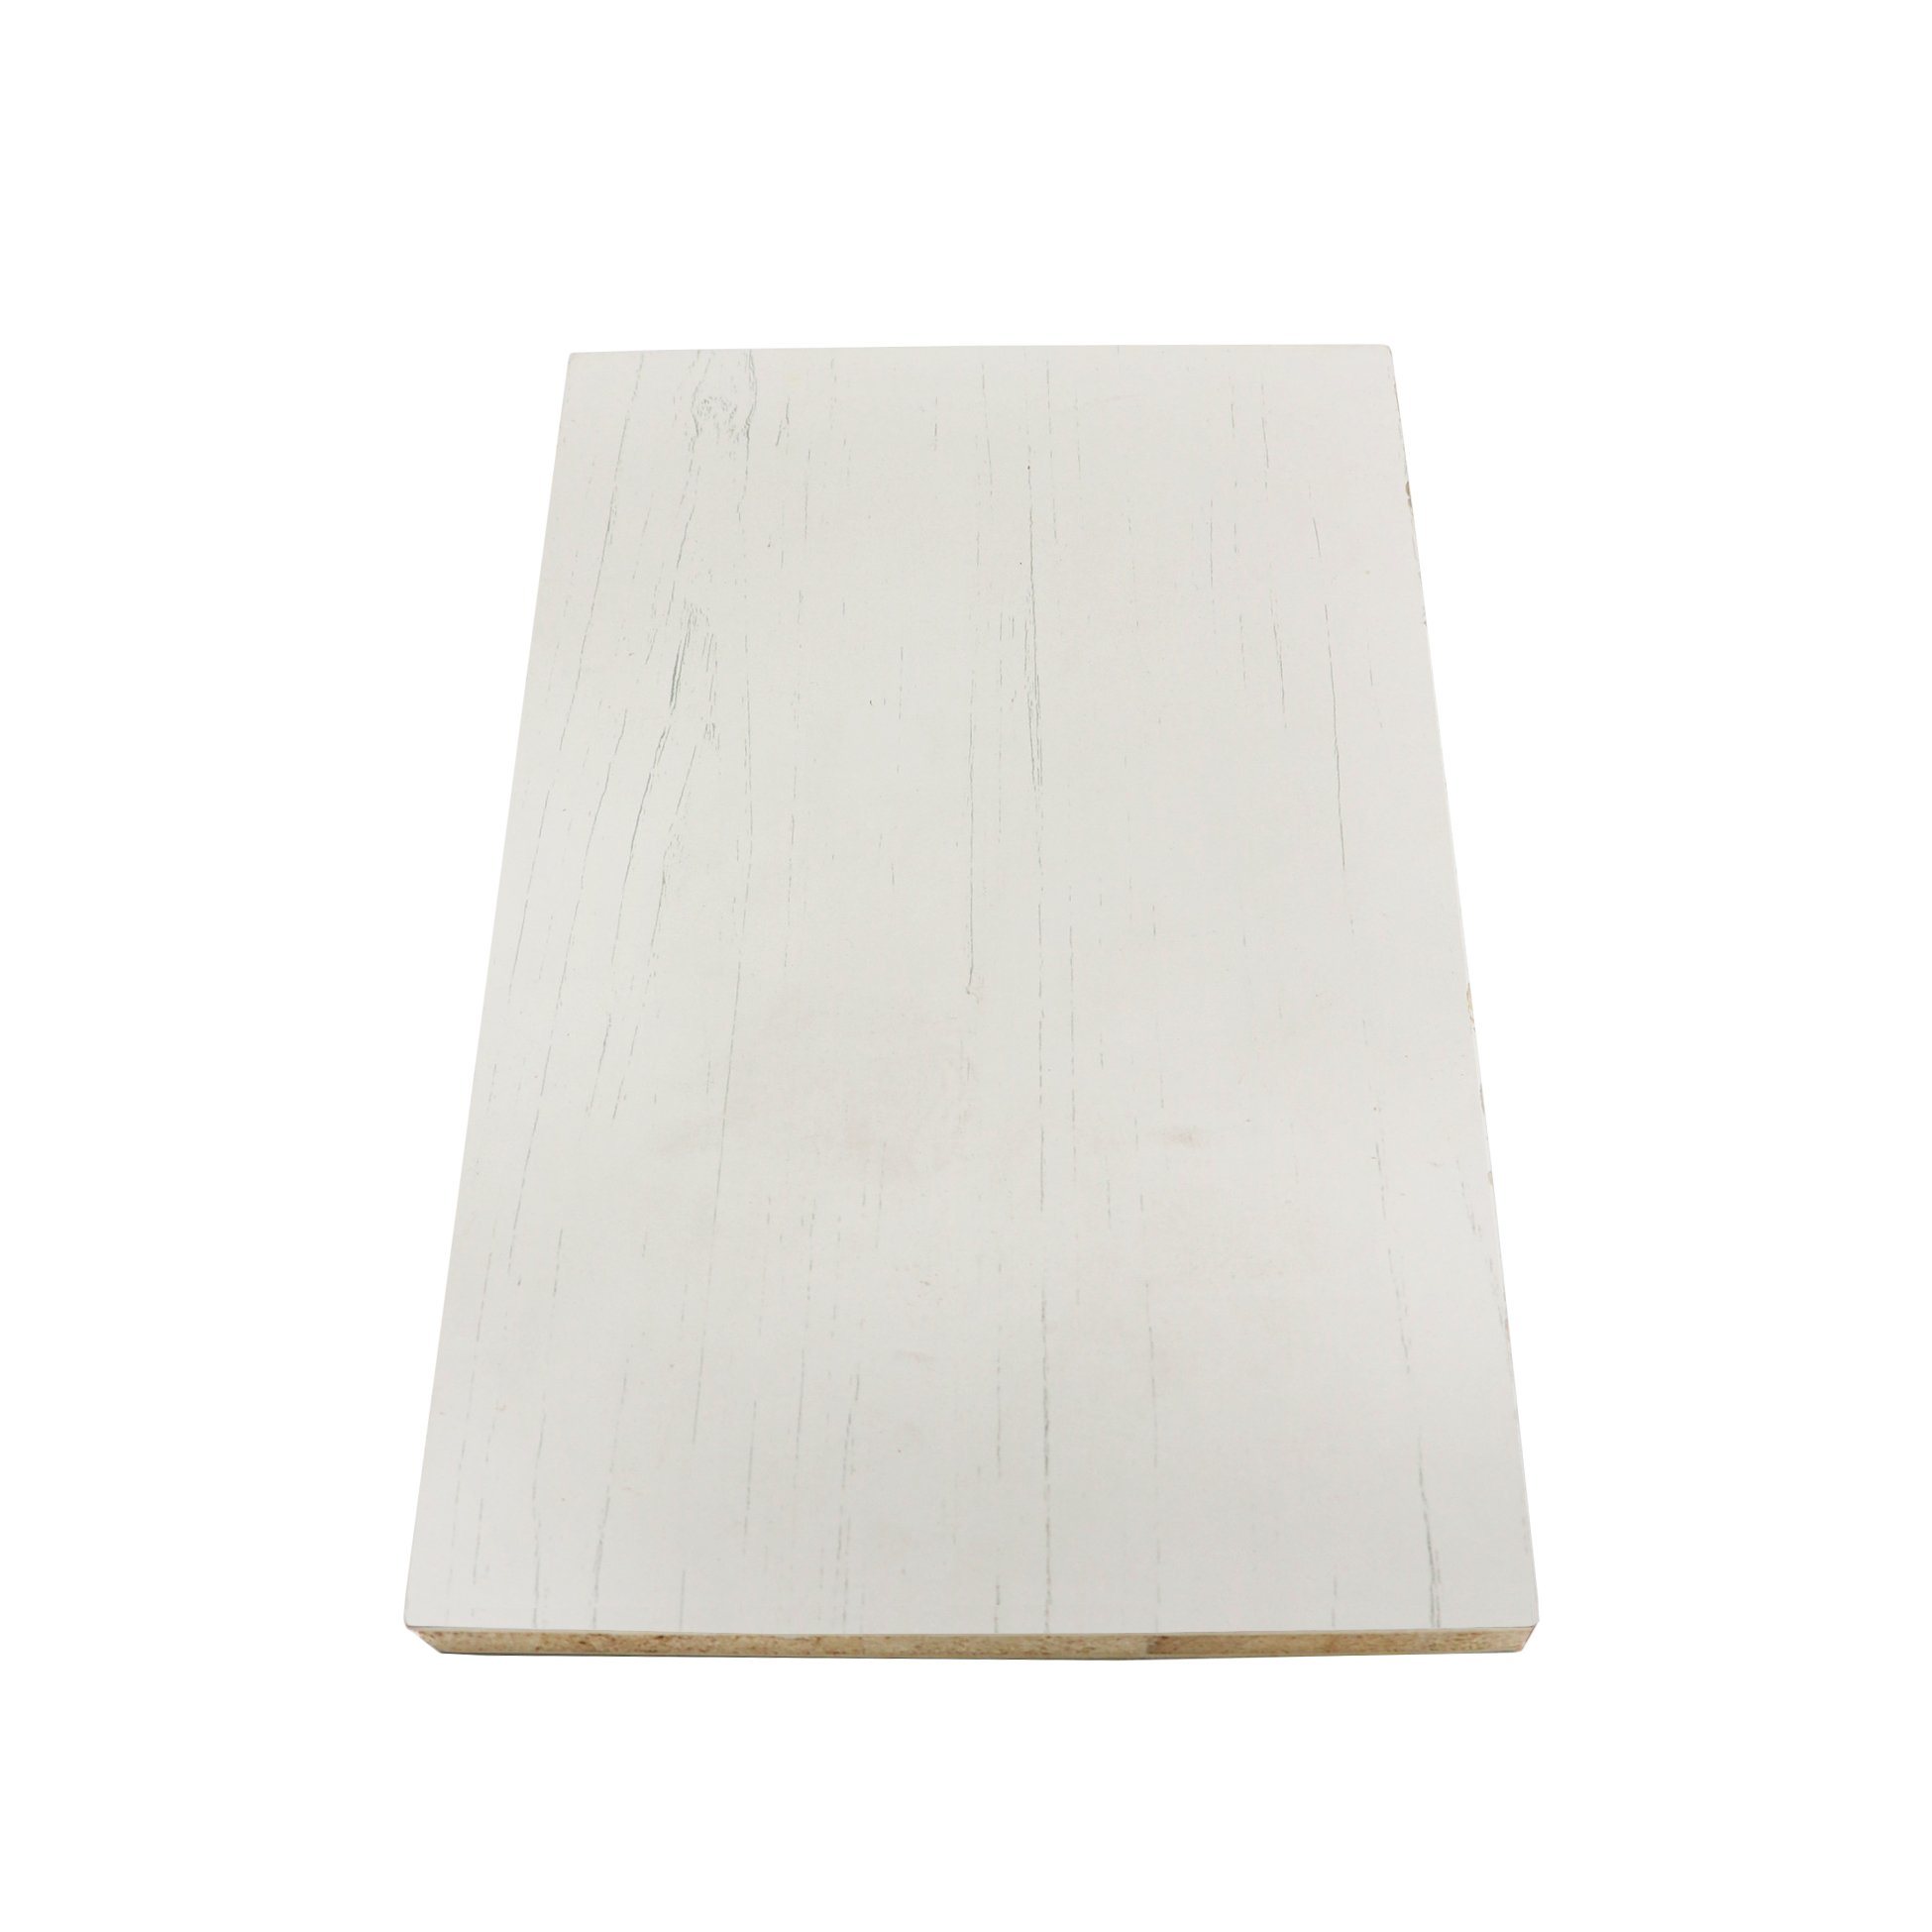 White Woodgrain Melamine Coated Plywood Board for Home Decoration